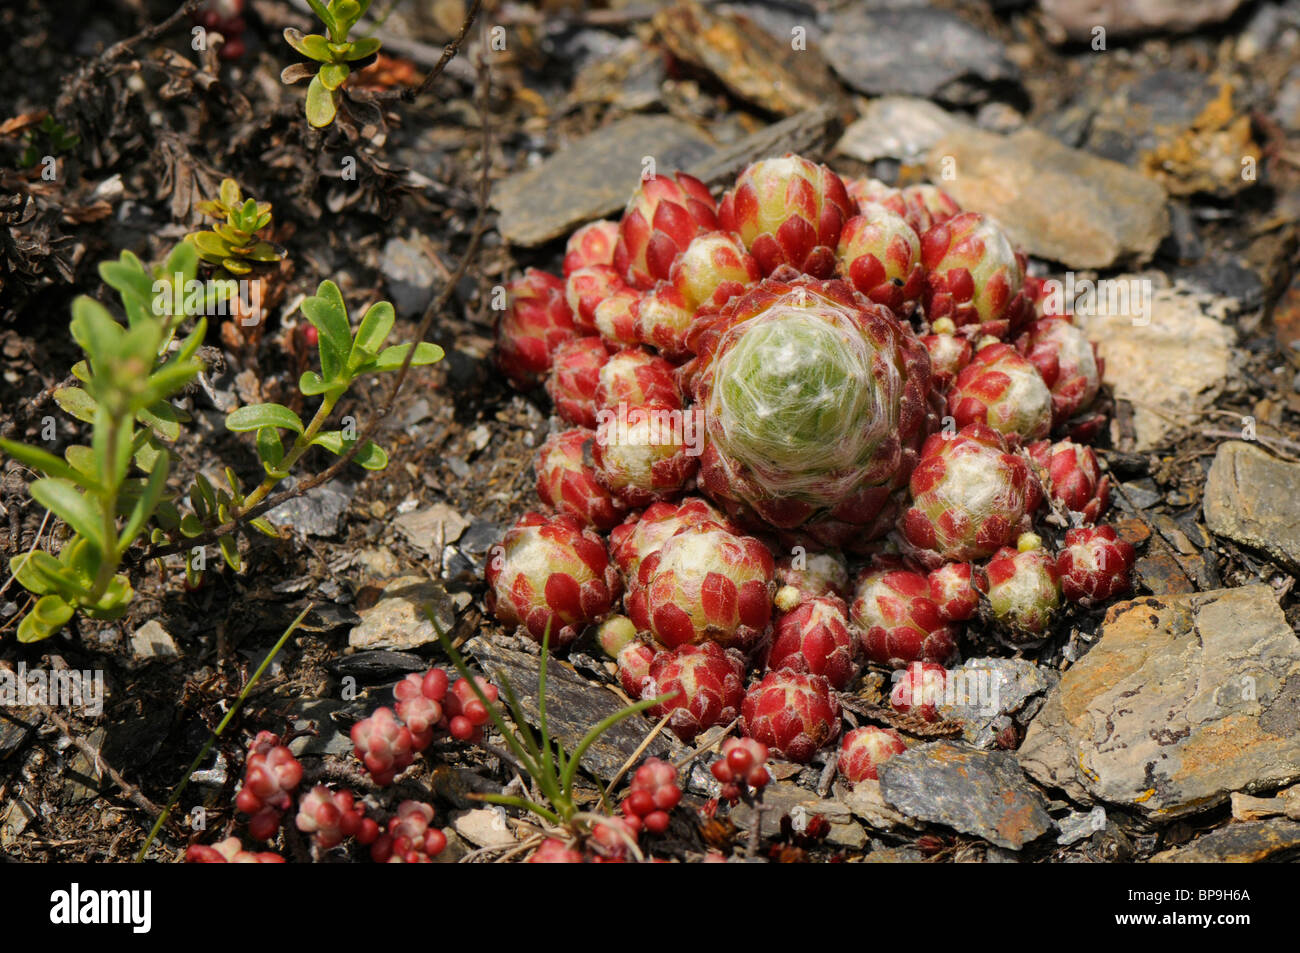 Ragnatela Casa Porro, ragnatela semprevivo (Sempervivum arachnoideum), che cresce su detriti, Spagna, Katalonia, Pirenei Foto Stock